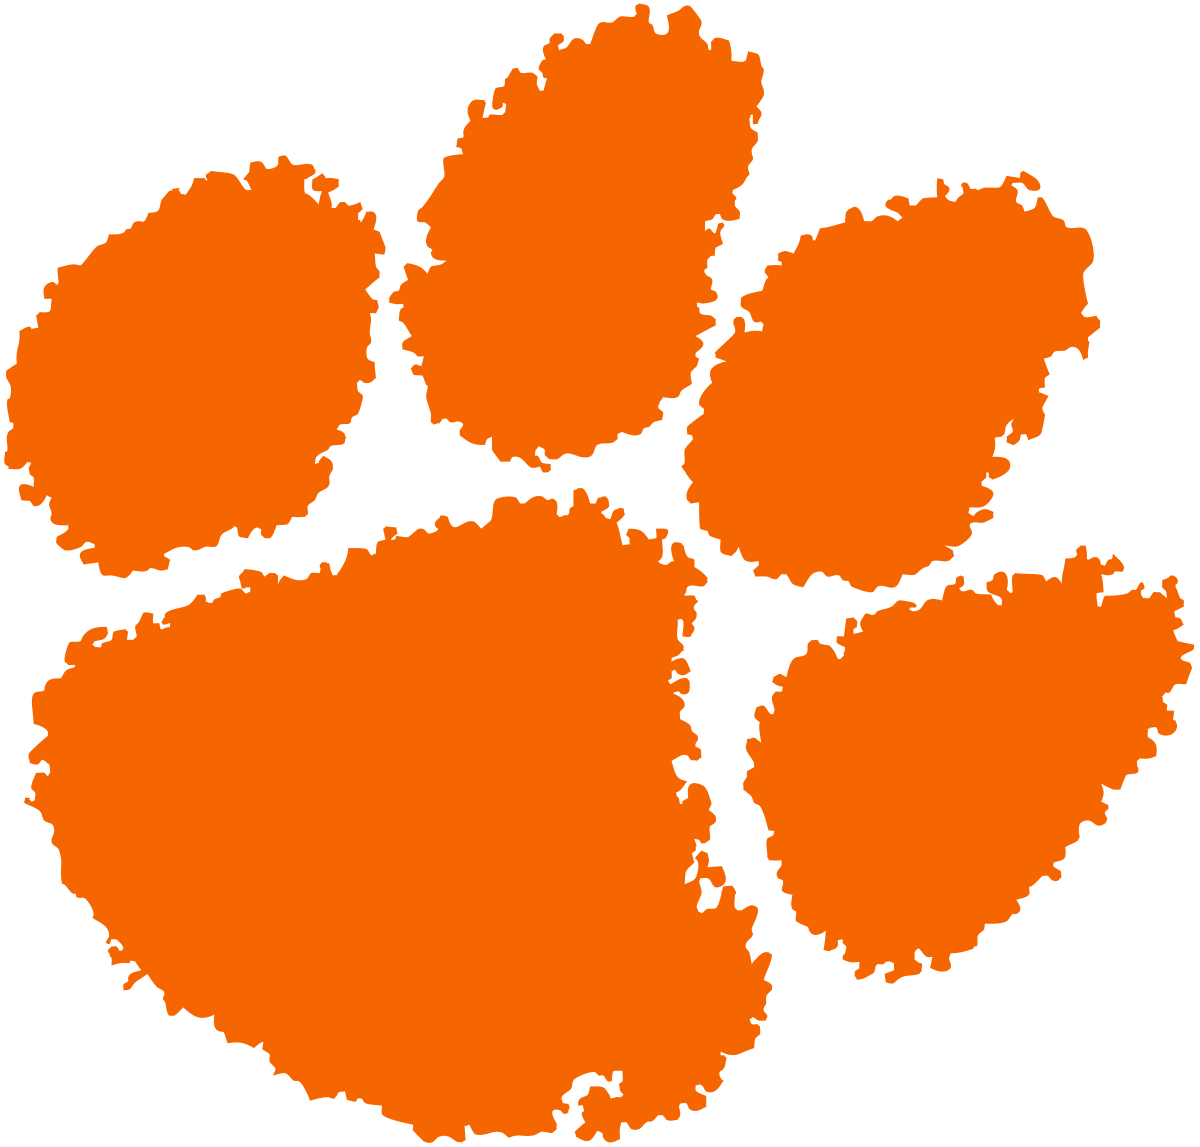 Clemson Tigers football - Wikipedia